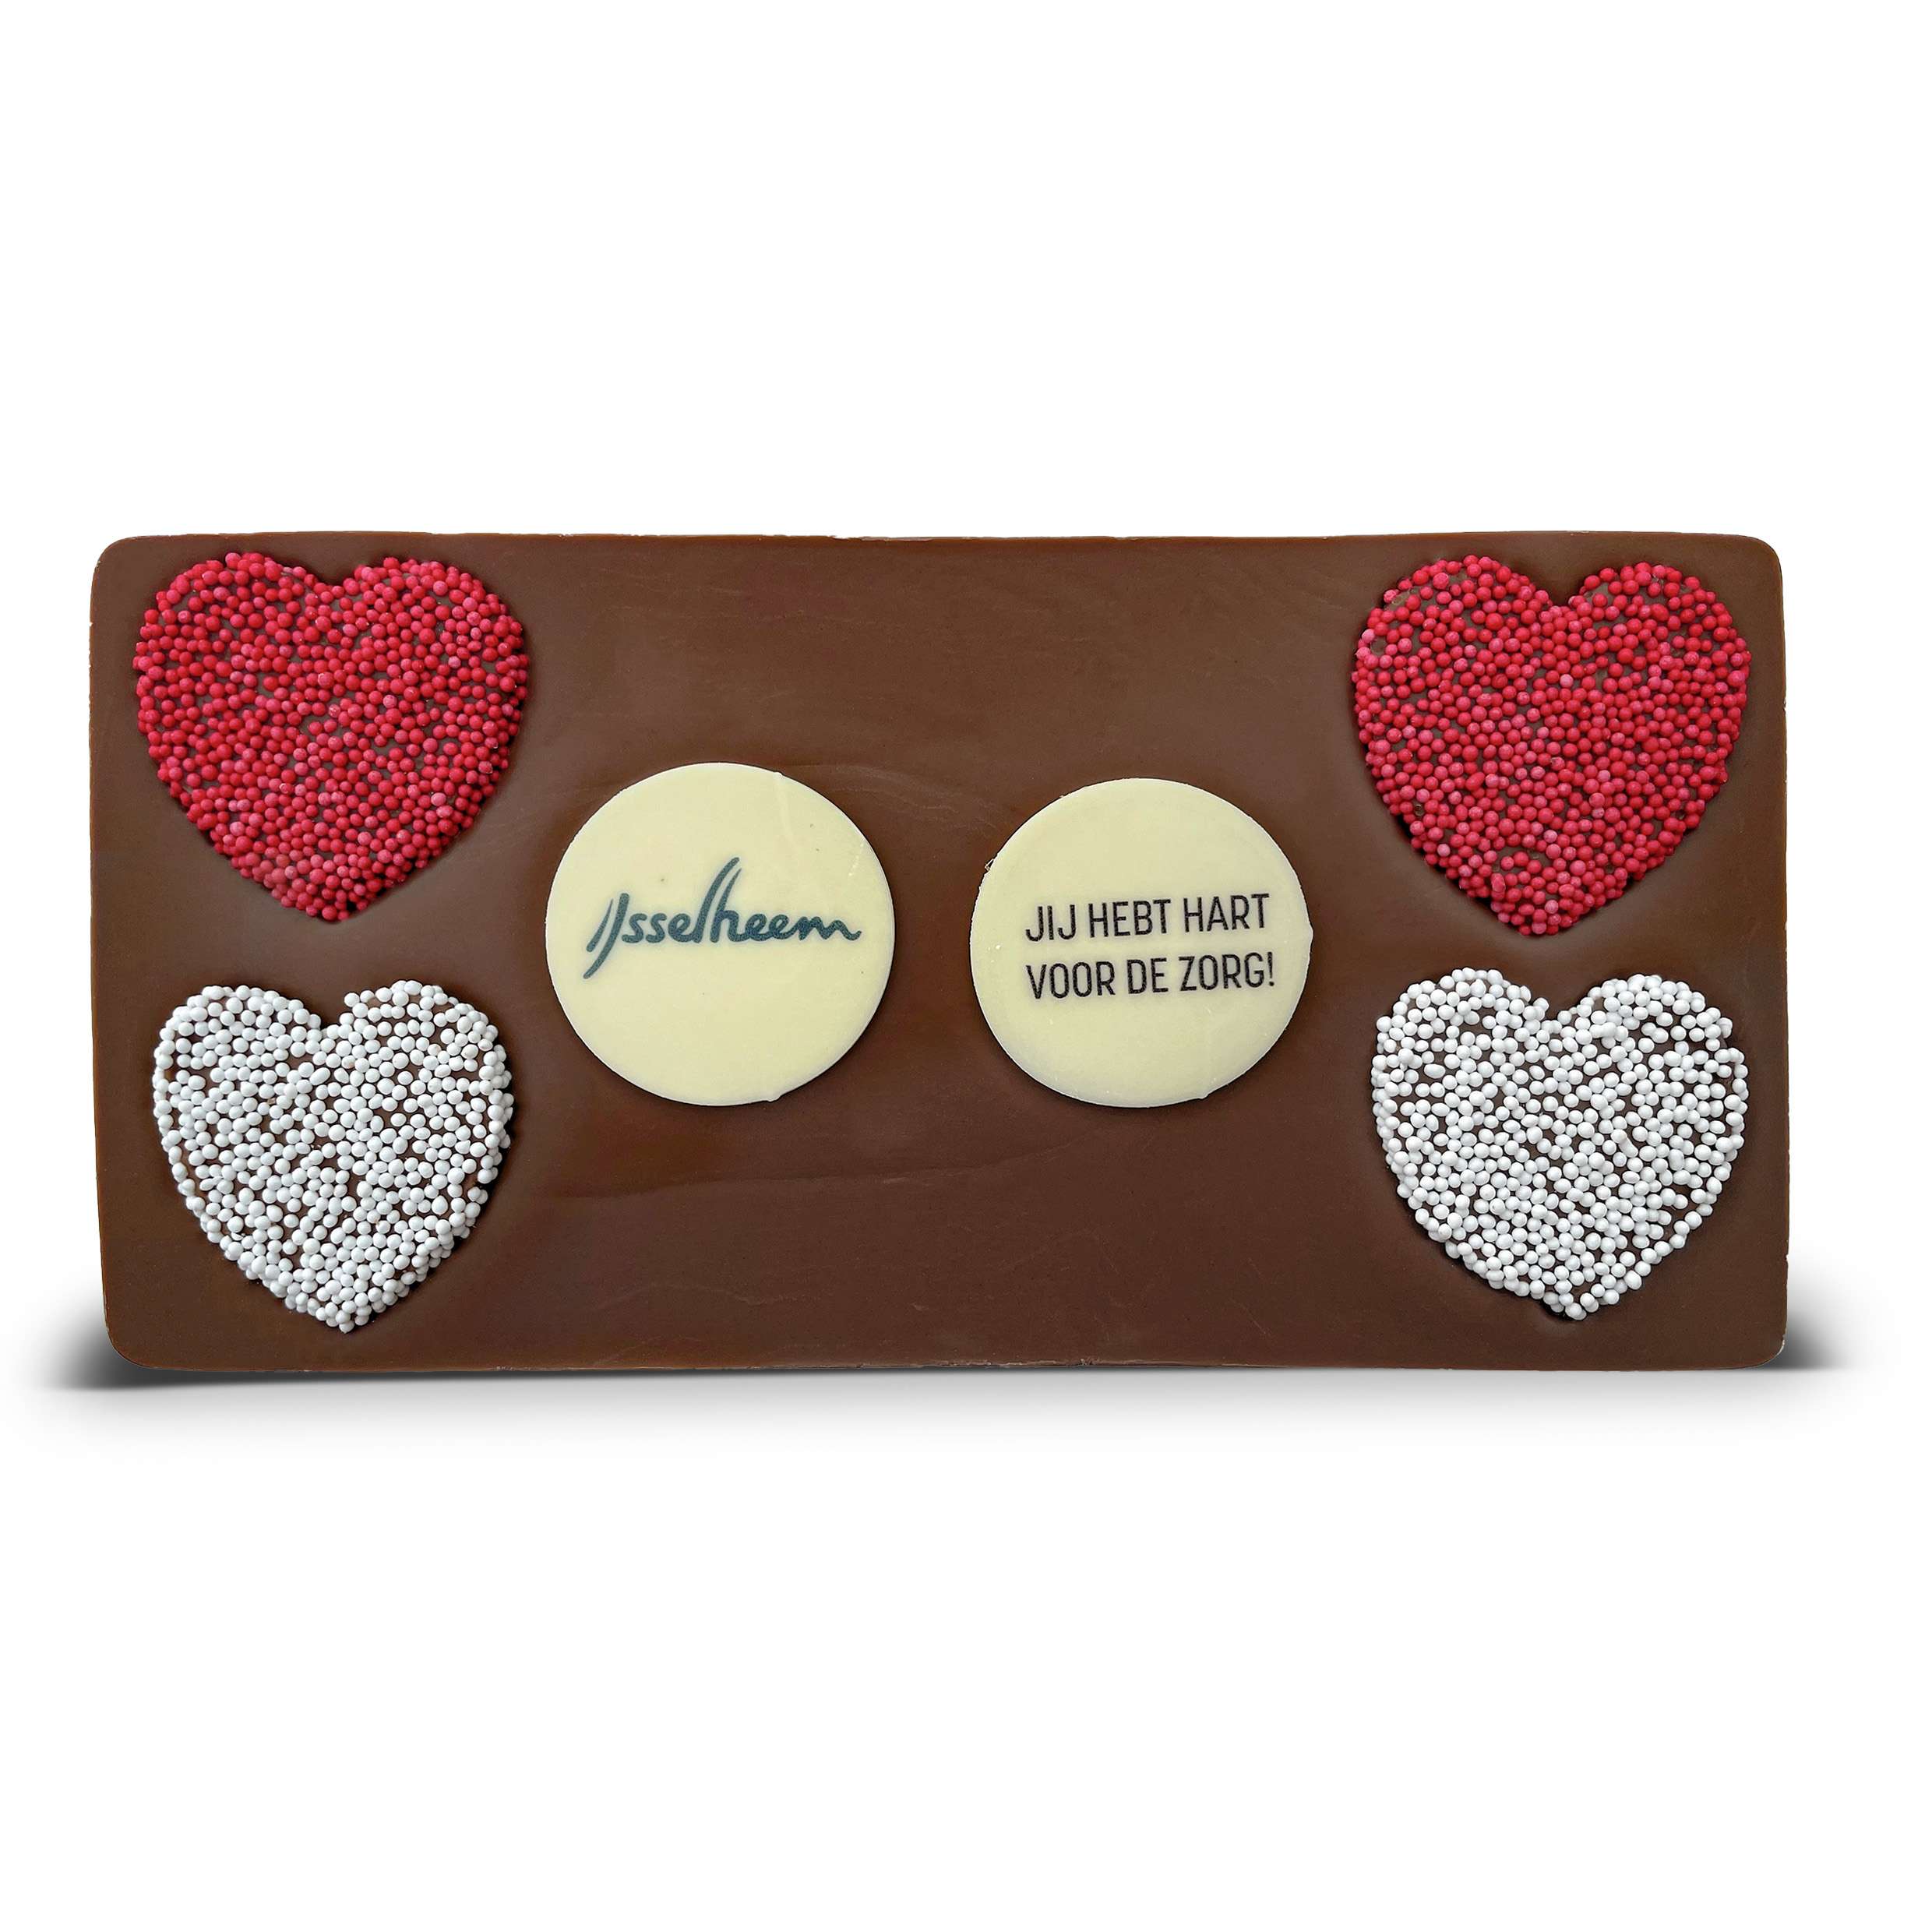 Melkchocolade tablet met muskethartjes logo en slogan